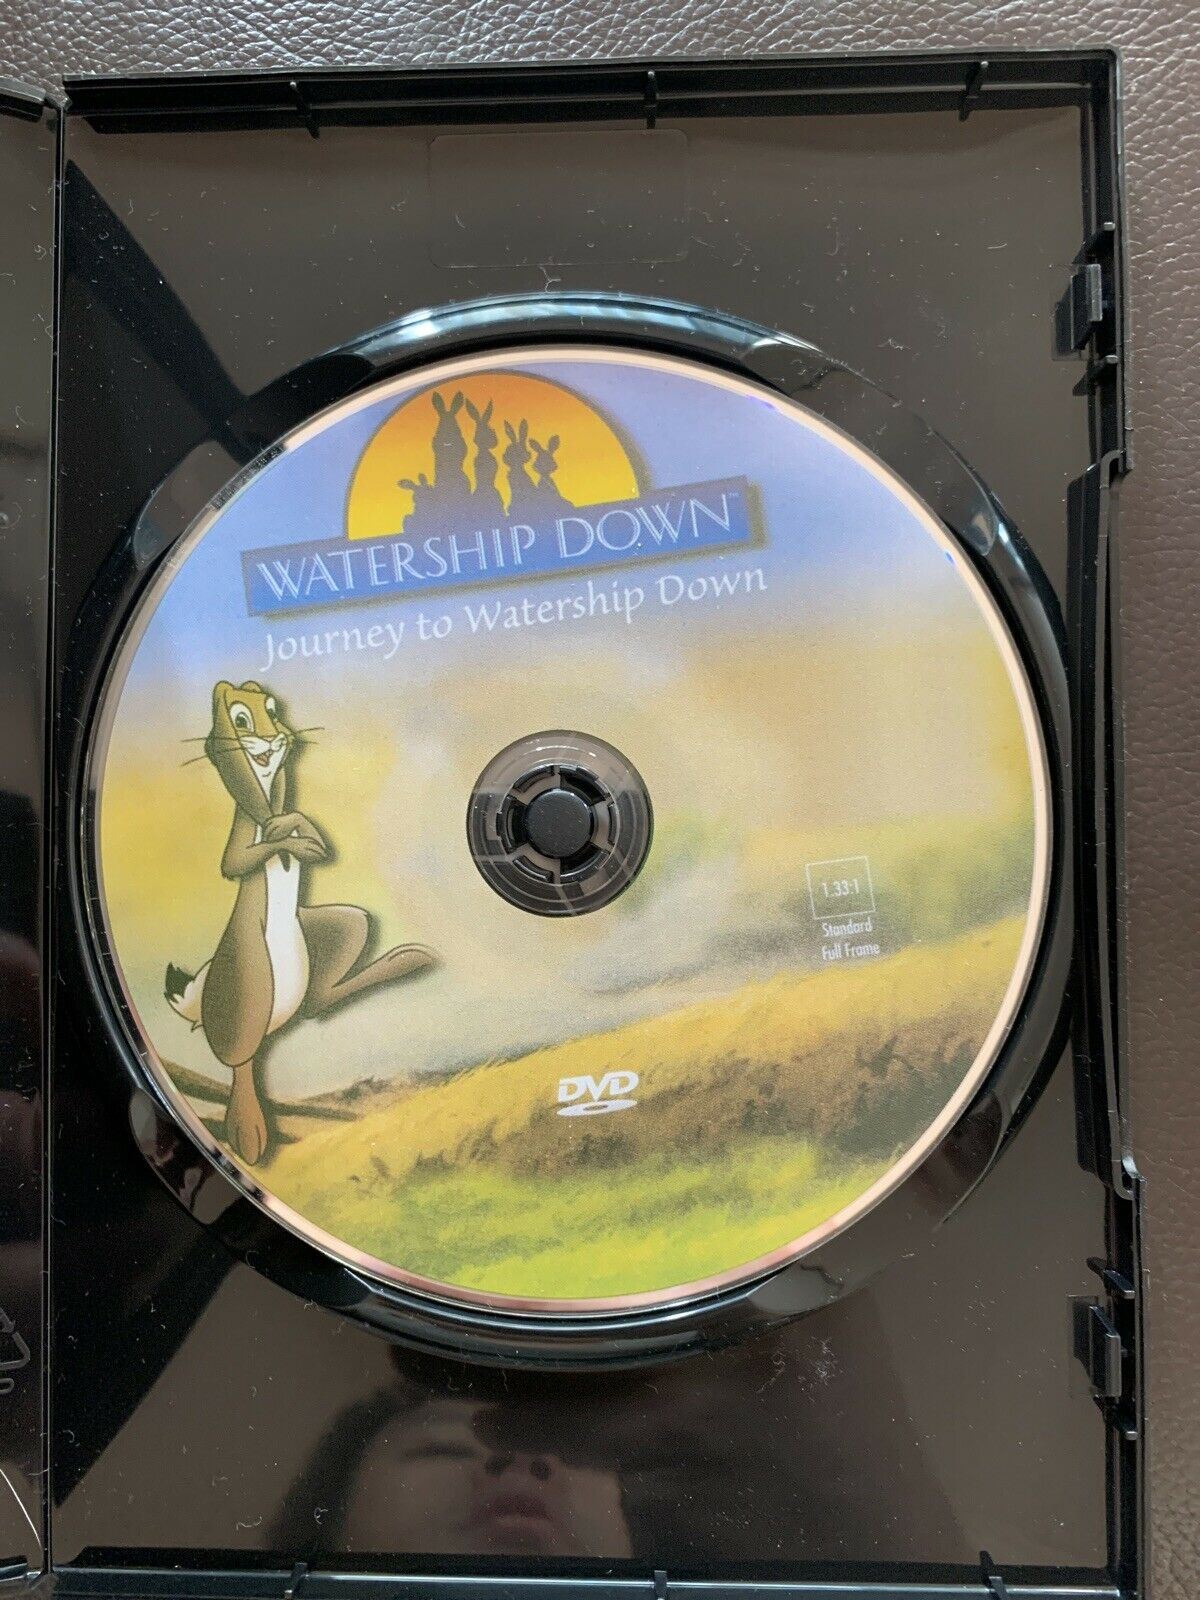 Watership Down - Journey To Watership Down (DVD) John Hurt - All Regions